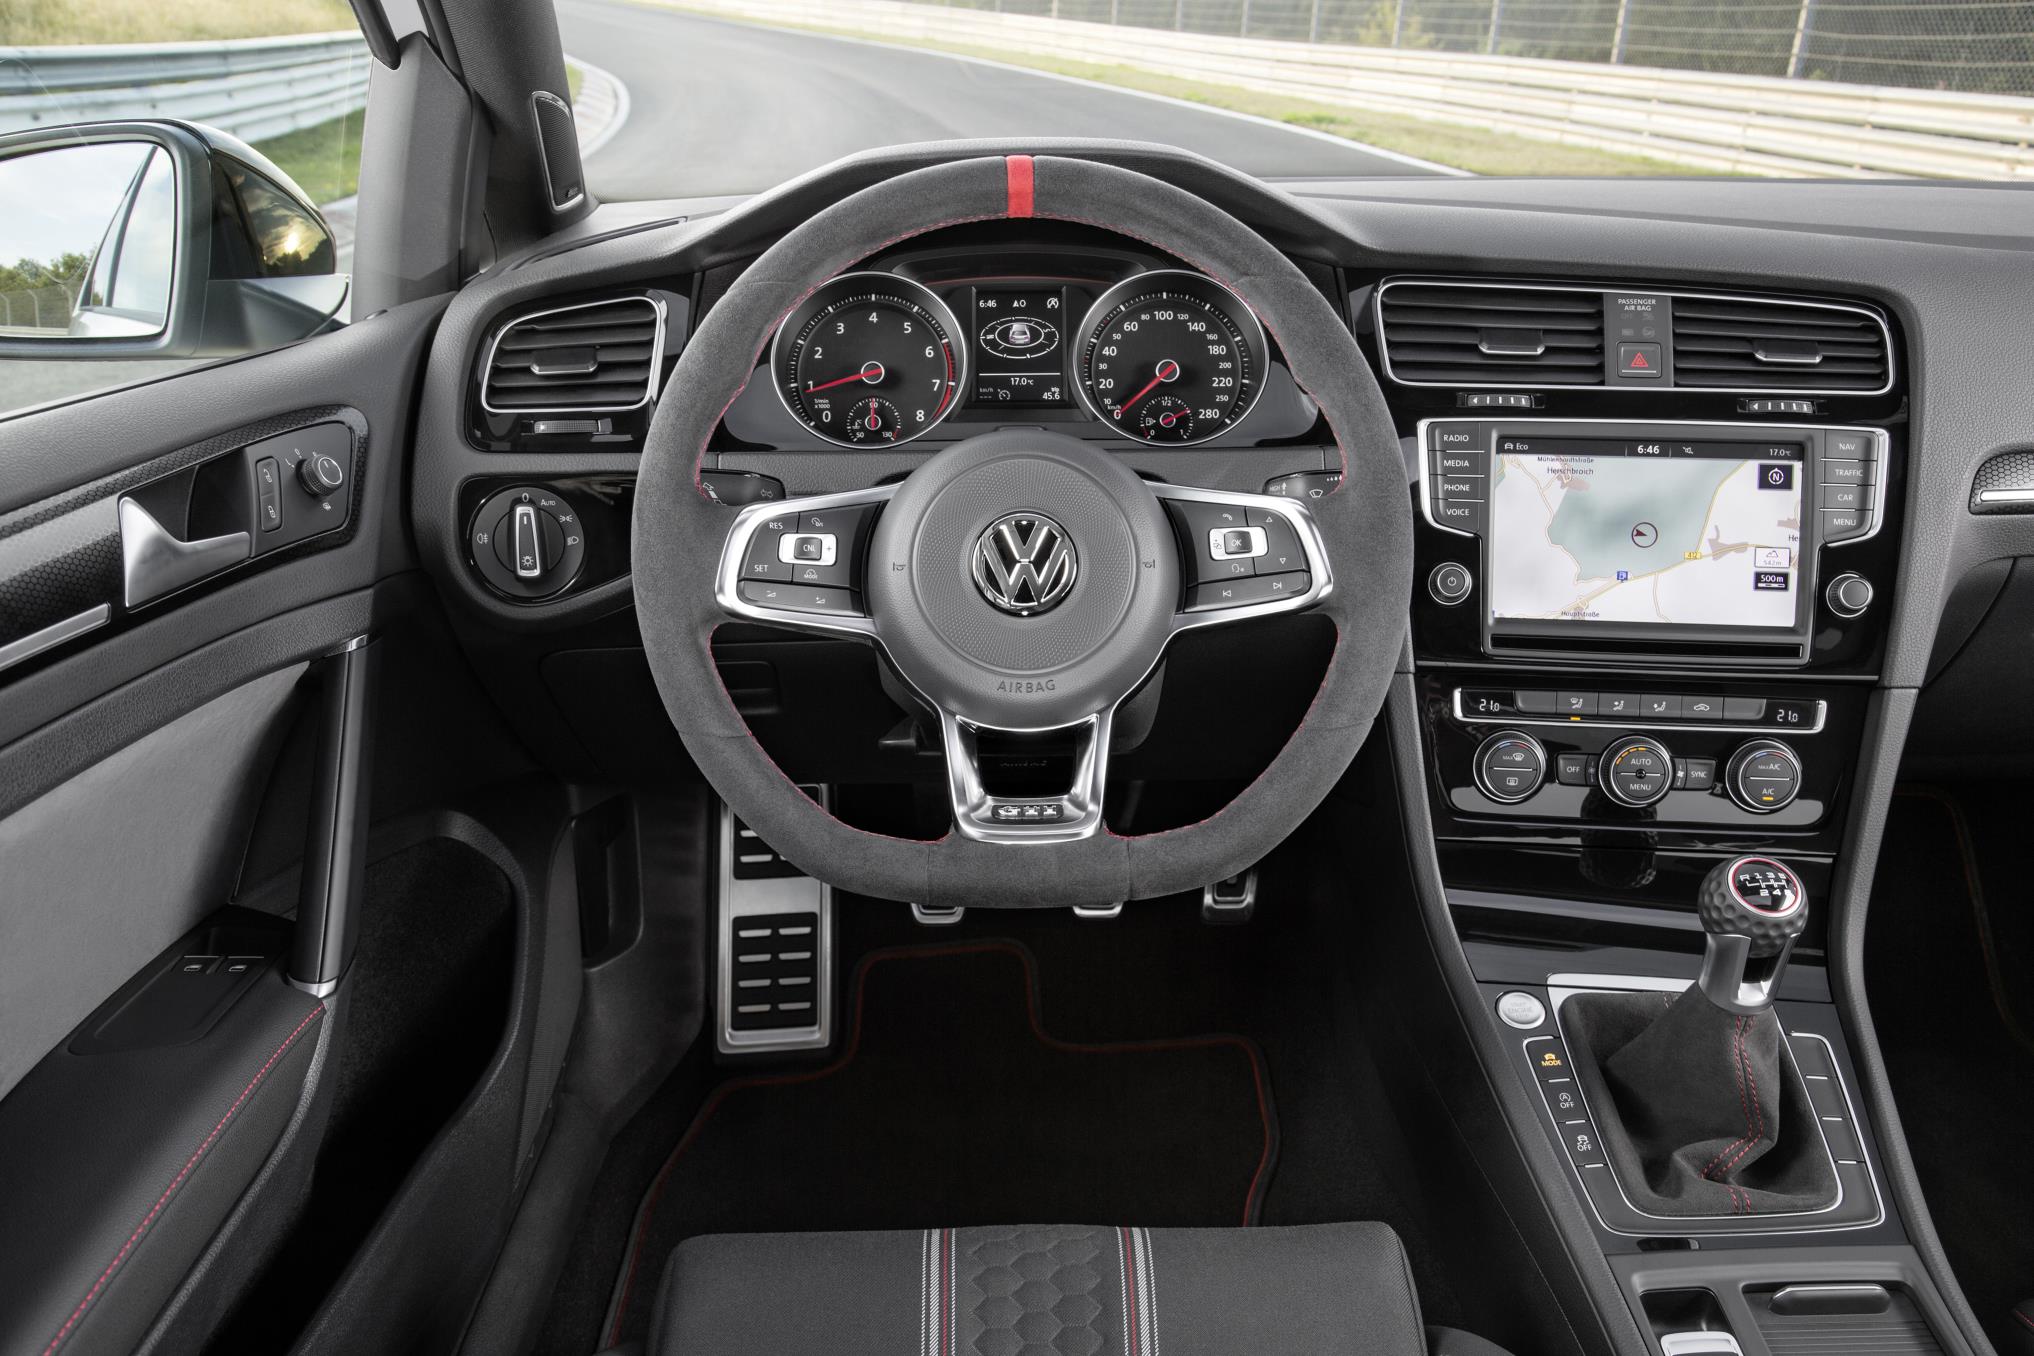 Volkswagen официально анонсировал 2016 Golf GTI Clubsport Edition 40